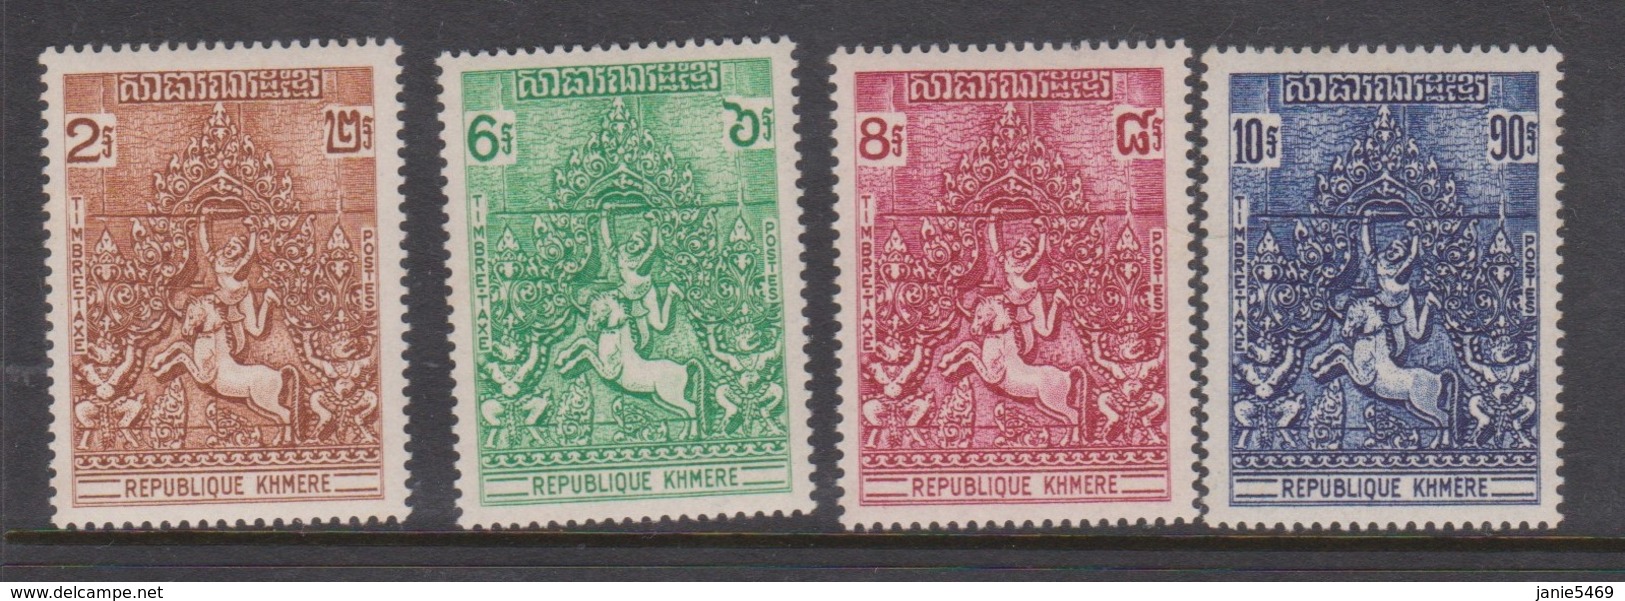 Cambodia Scott J6-J9 1974 Postage Due,mint Never Hinged - Kambodscha